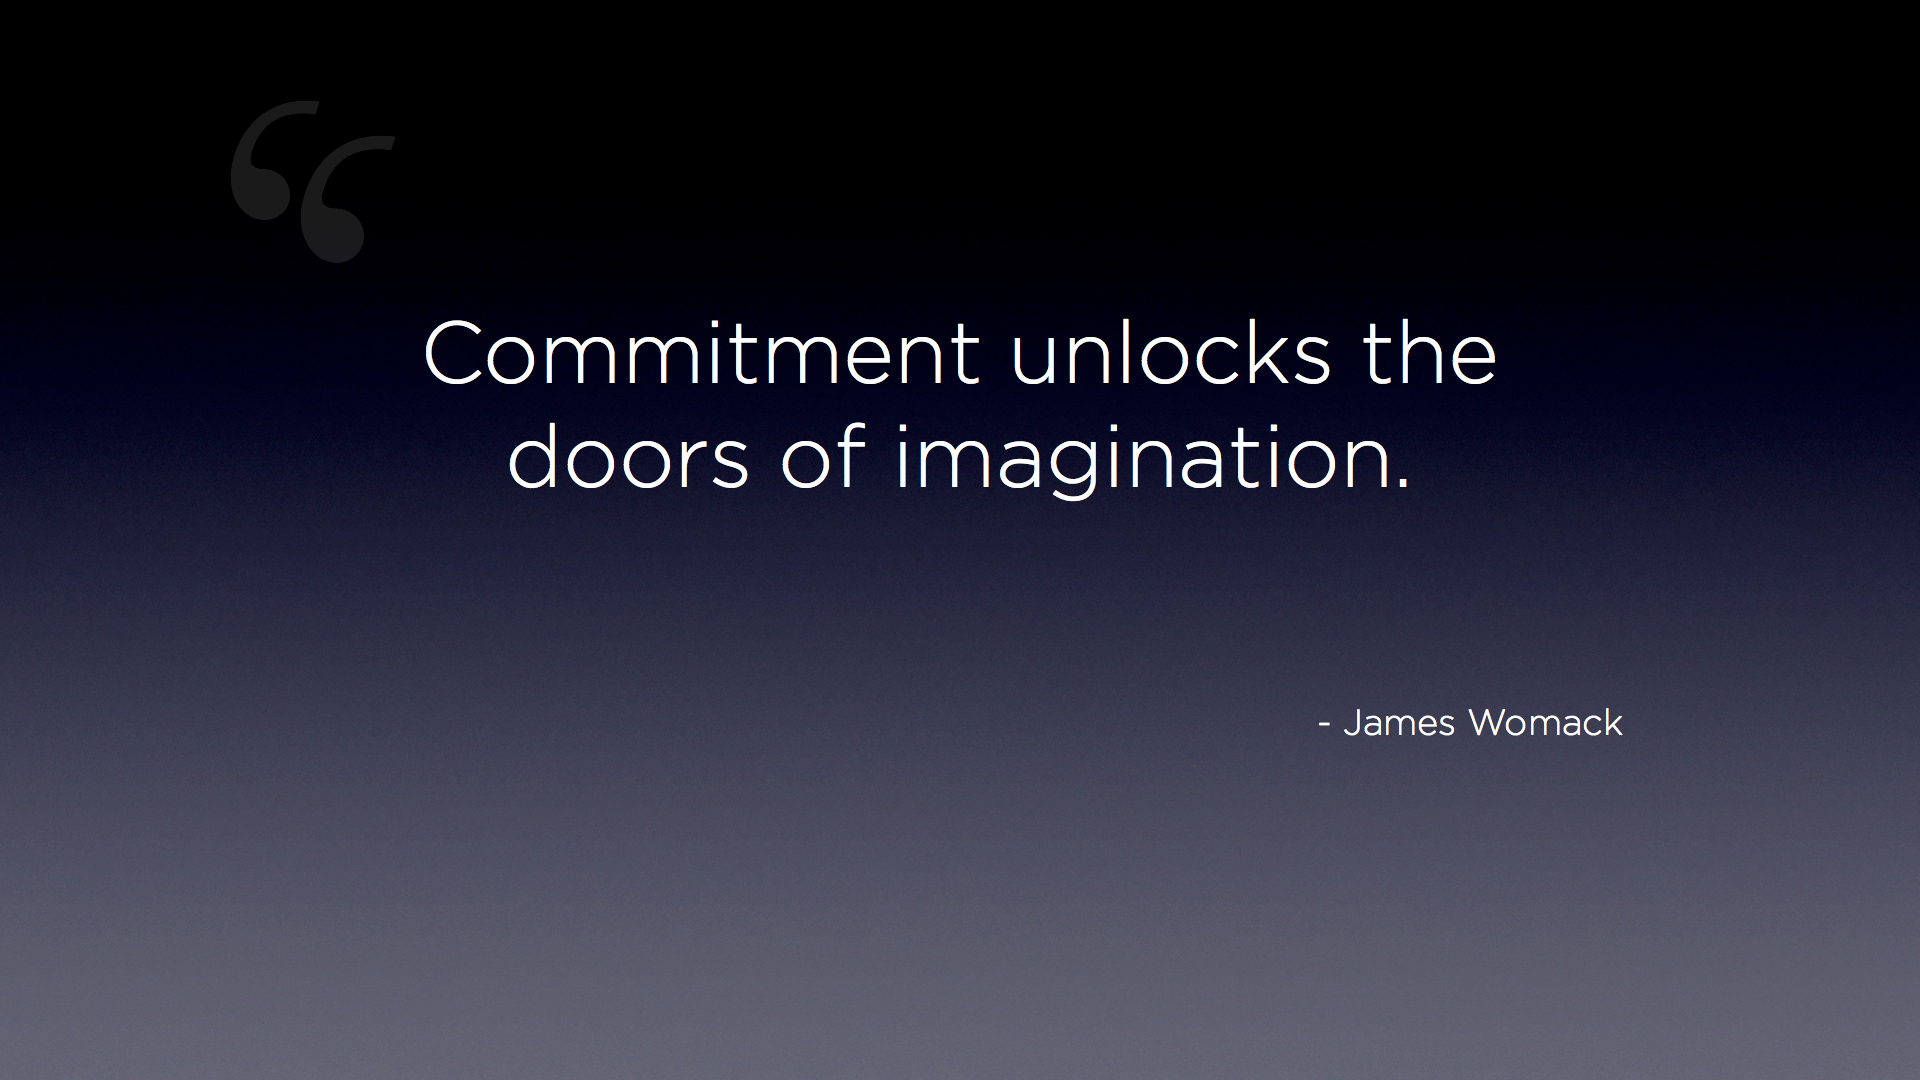 Commitment unlocks the doors of imagination. James Womack